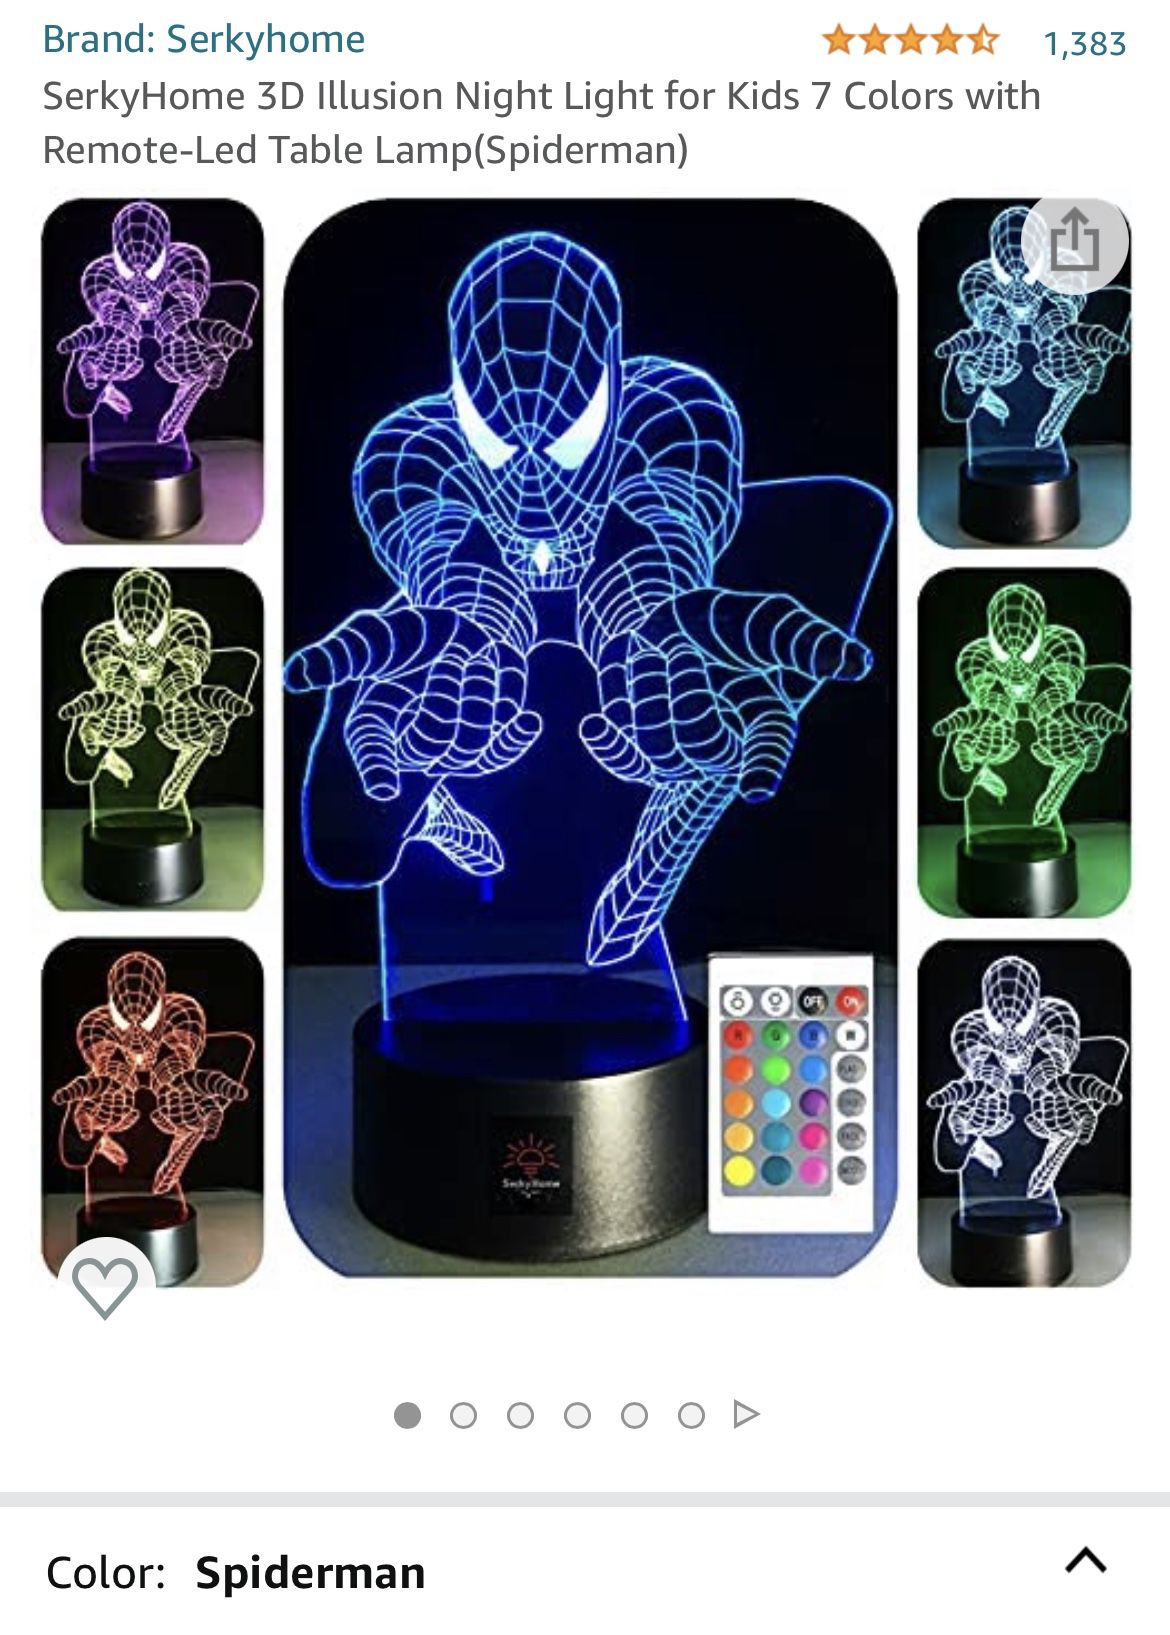 3D Spider-Man Illusion Night Light